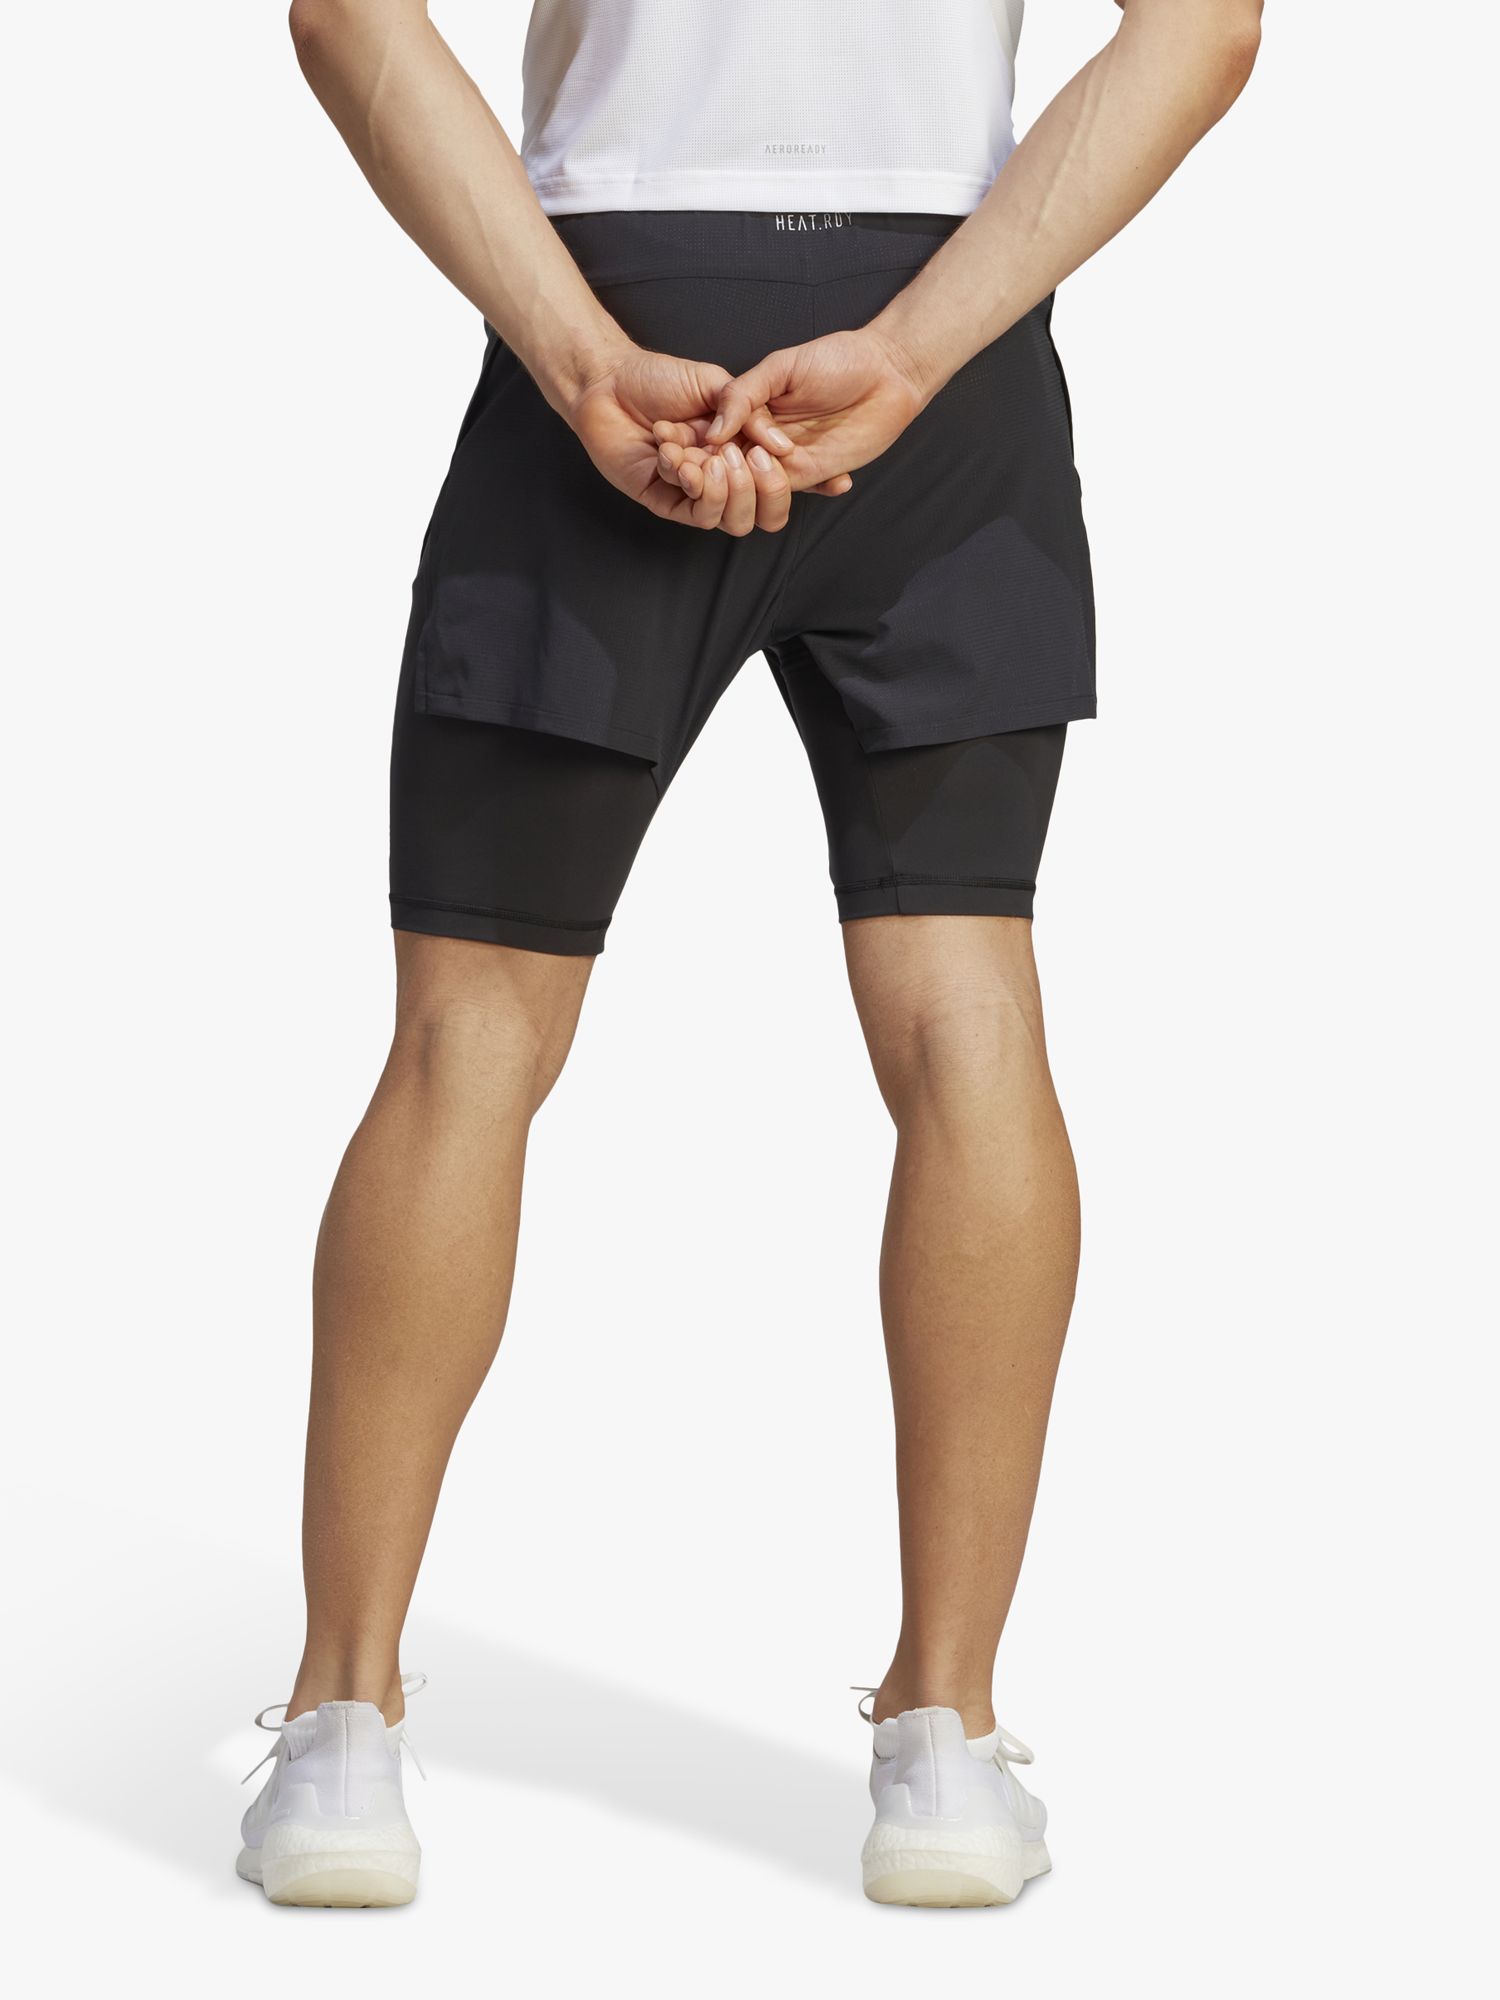 adidas HIIT EL Men's 2-in-1 Shorts, Black, S